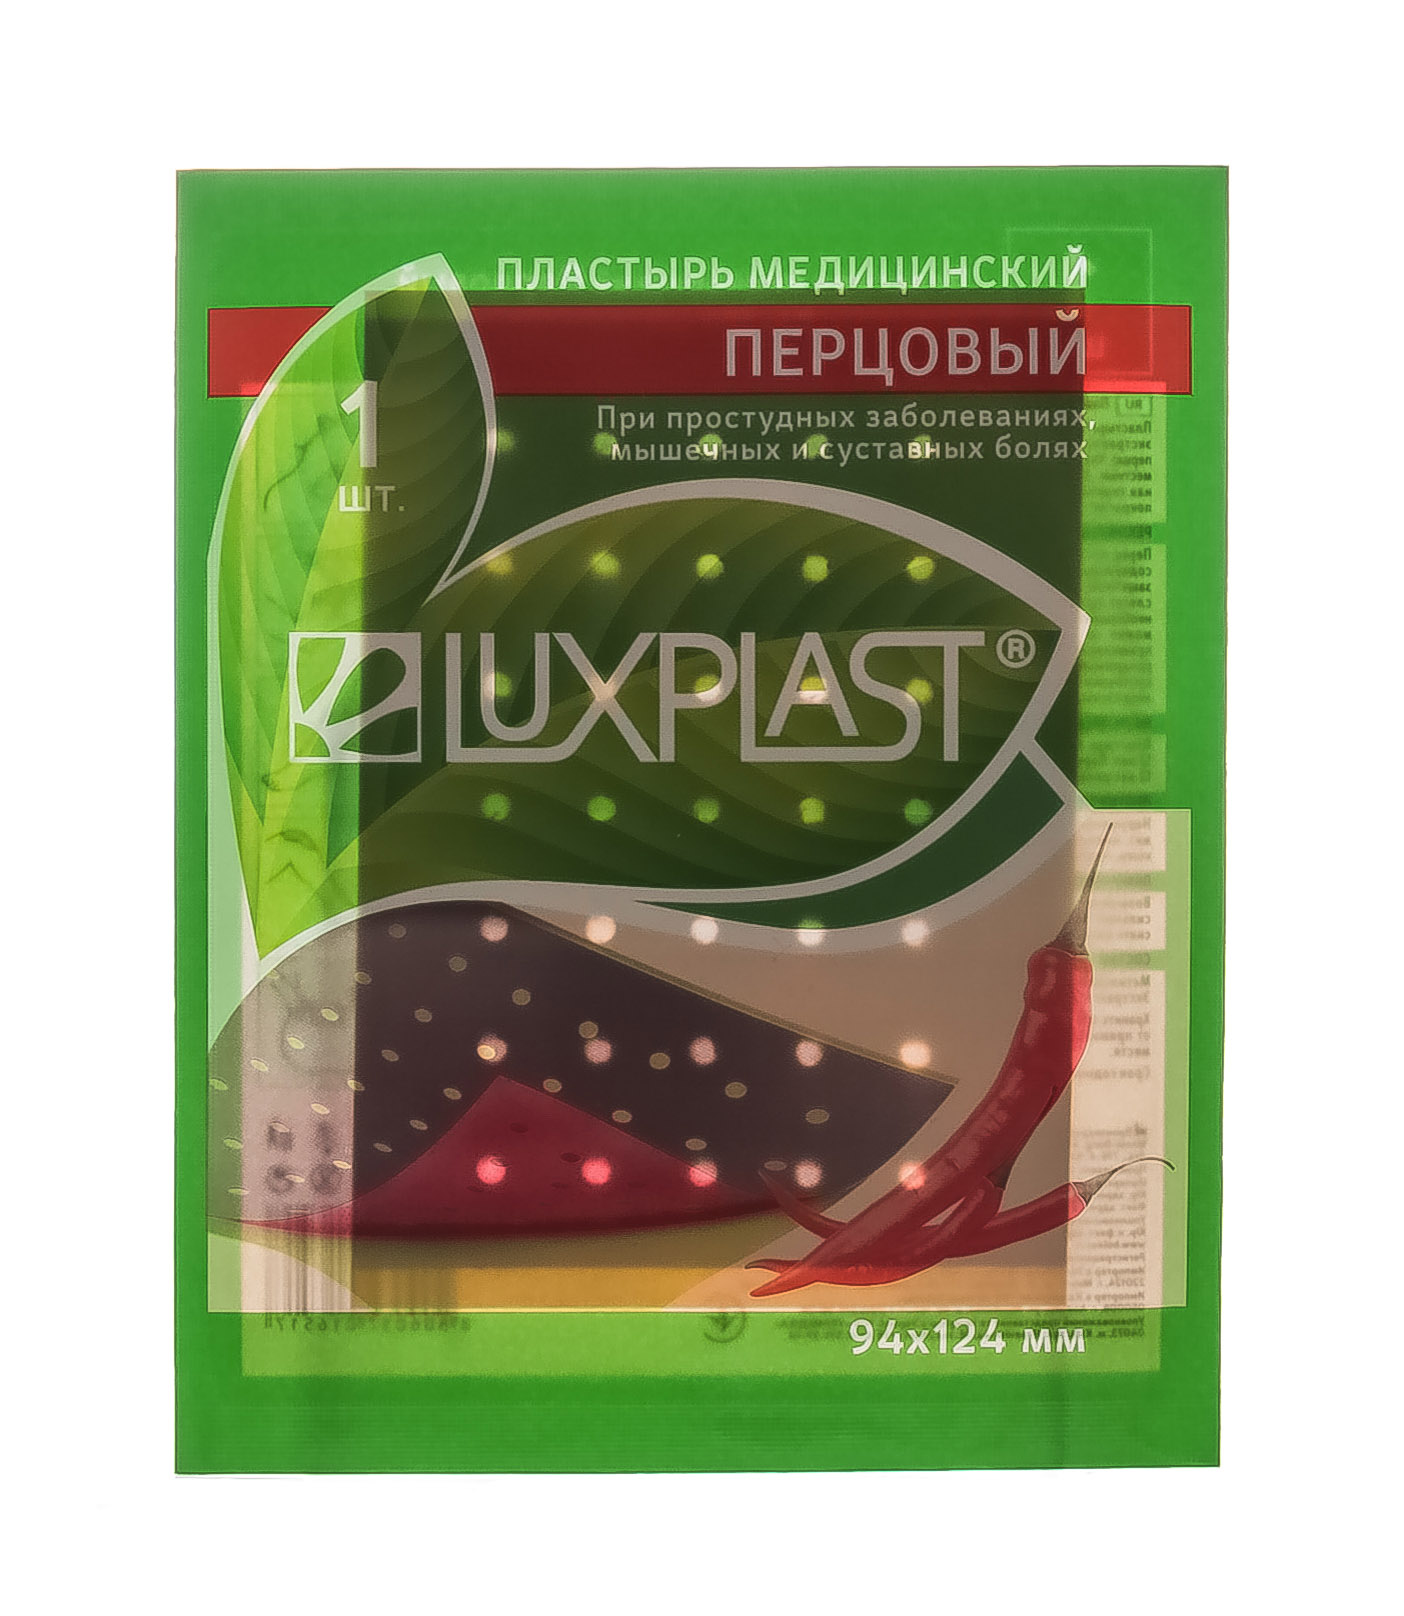 Luxplast Пластырь медицинский перцовый 94х124 мм, 1 шт (Luxp